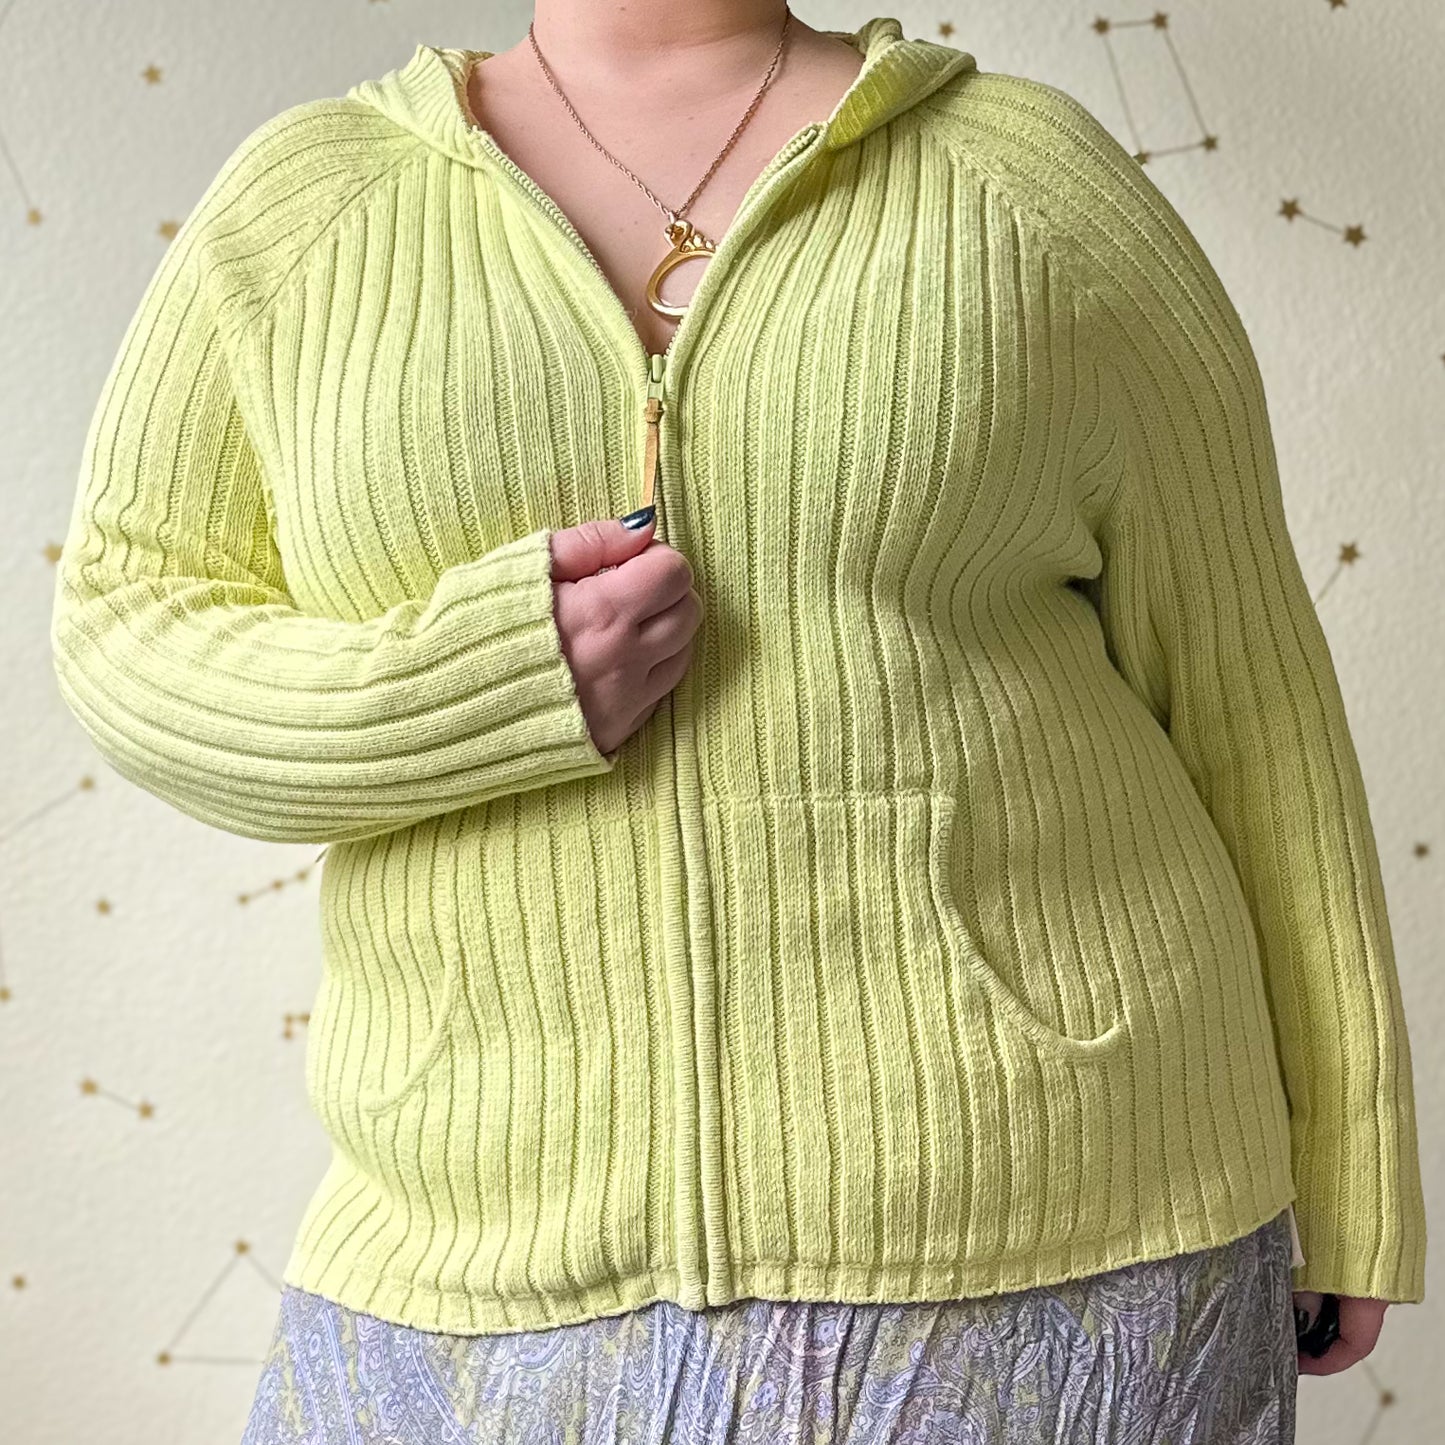 granny smith cardigan sweater